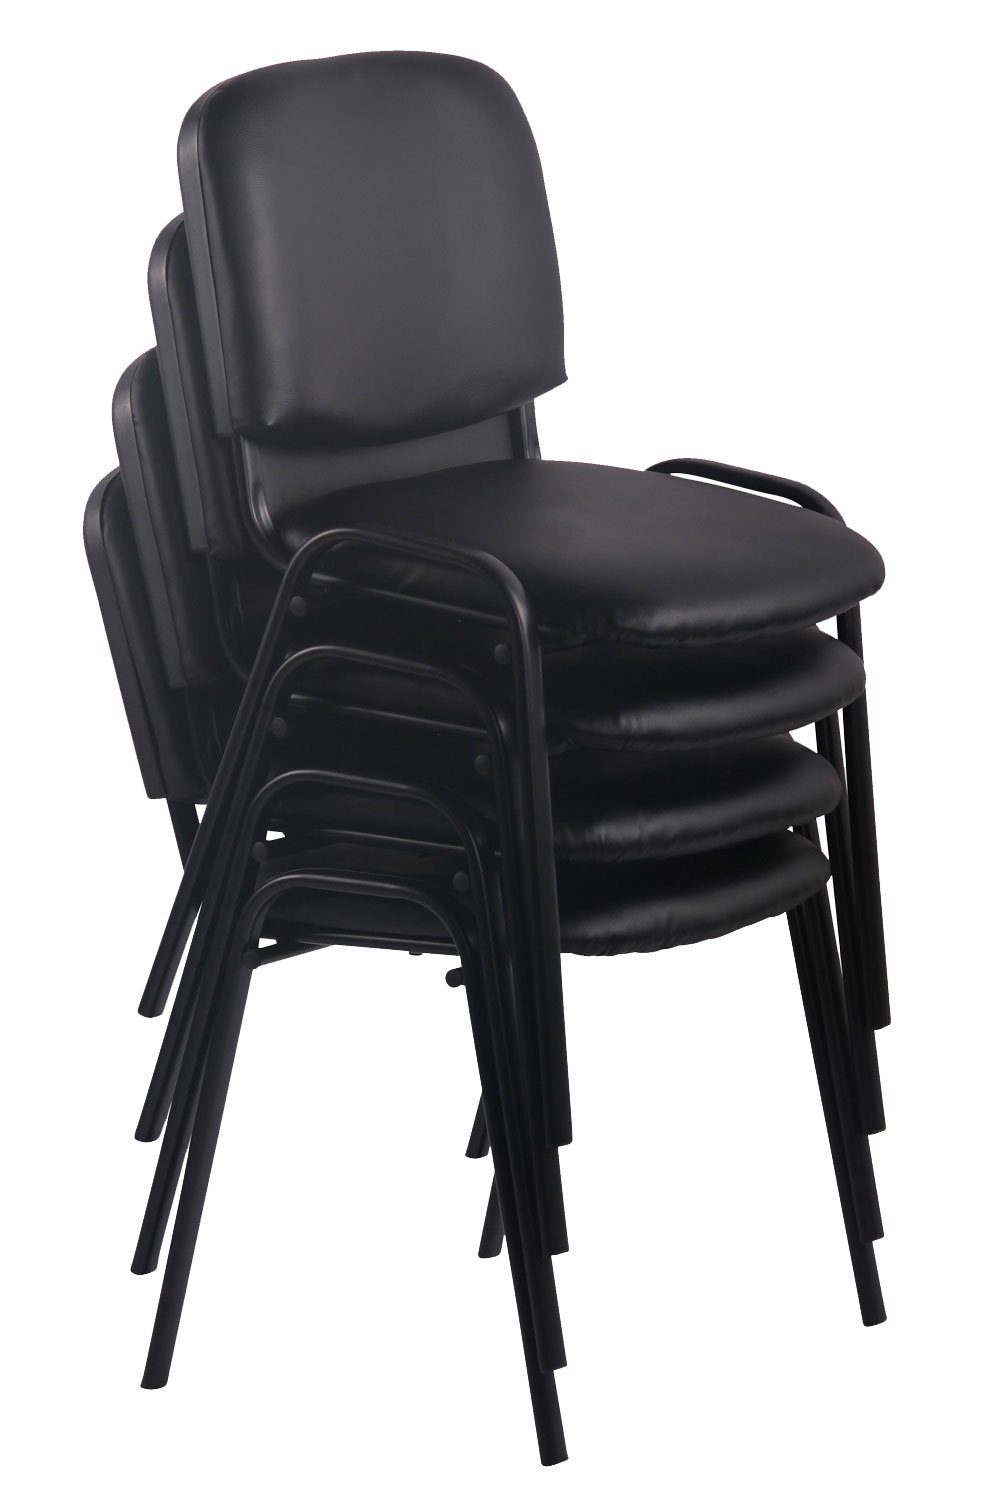 Metall TPFLiving St), hochwertiger Polsterung - grün matt Sitzfläche: Konferenzstuhl Besucherstuhl (Besprechungsstuhl 4 schwarz Kunstleder mit Warteraumstuhl Gestell: - Keen - Messestuhl, -